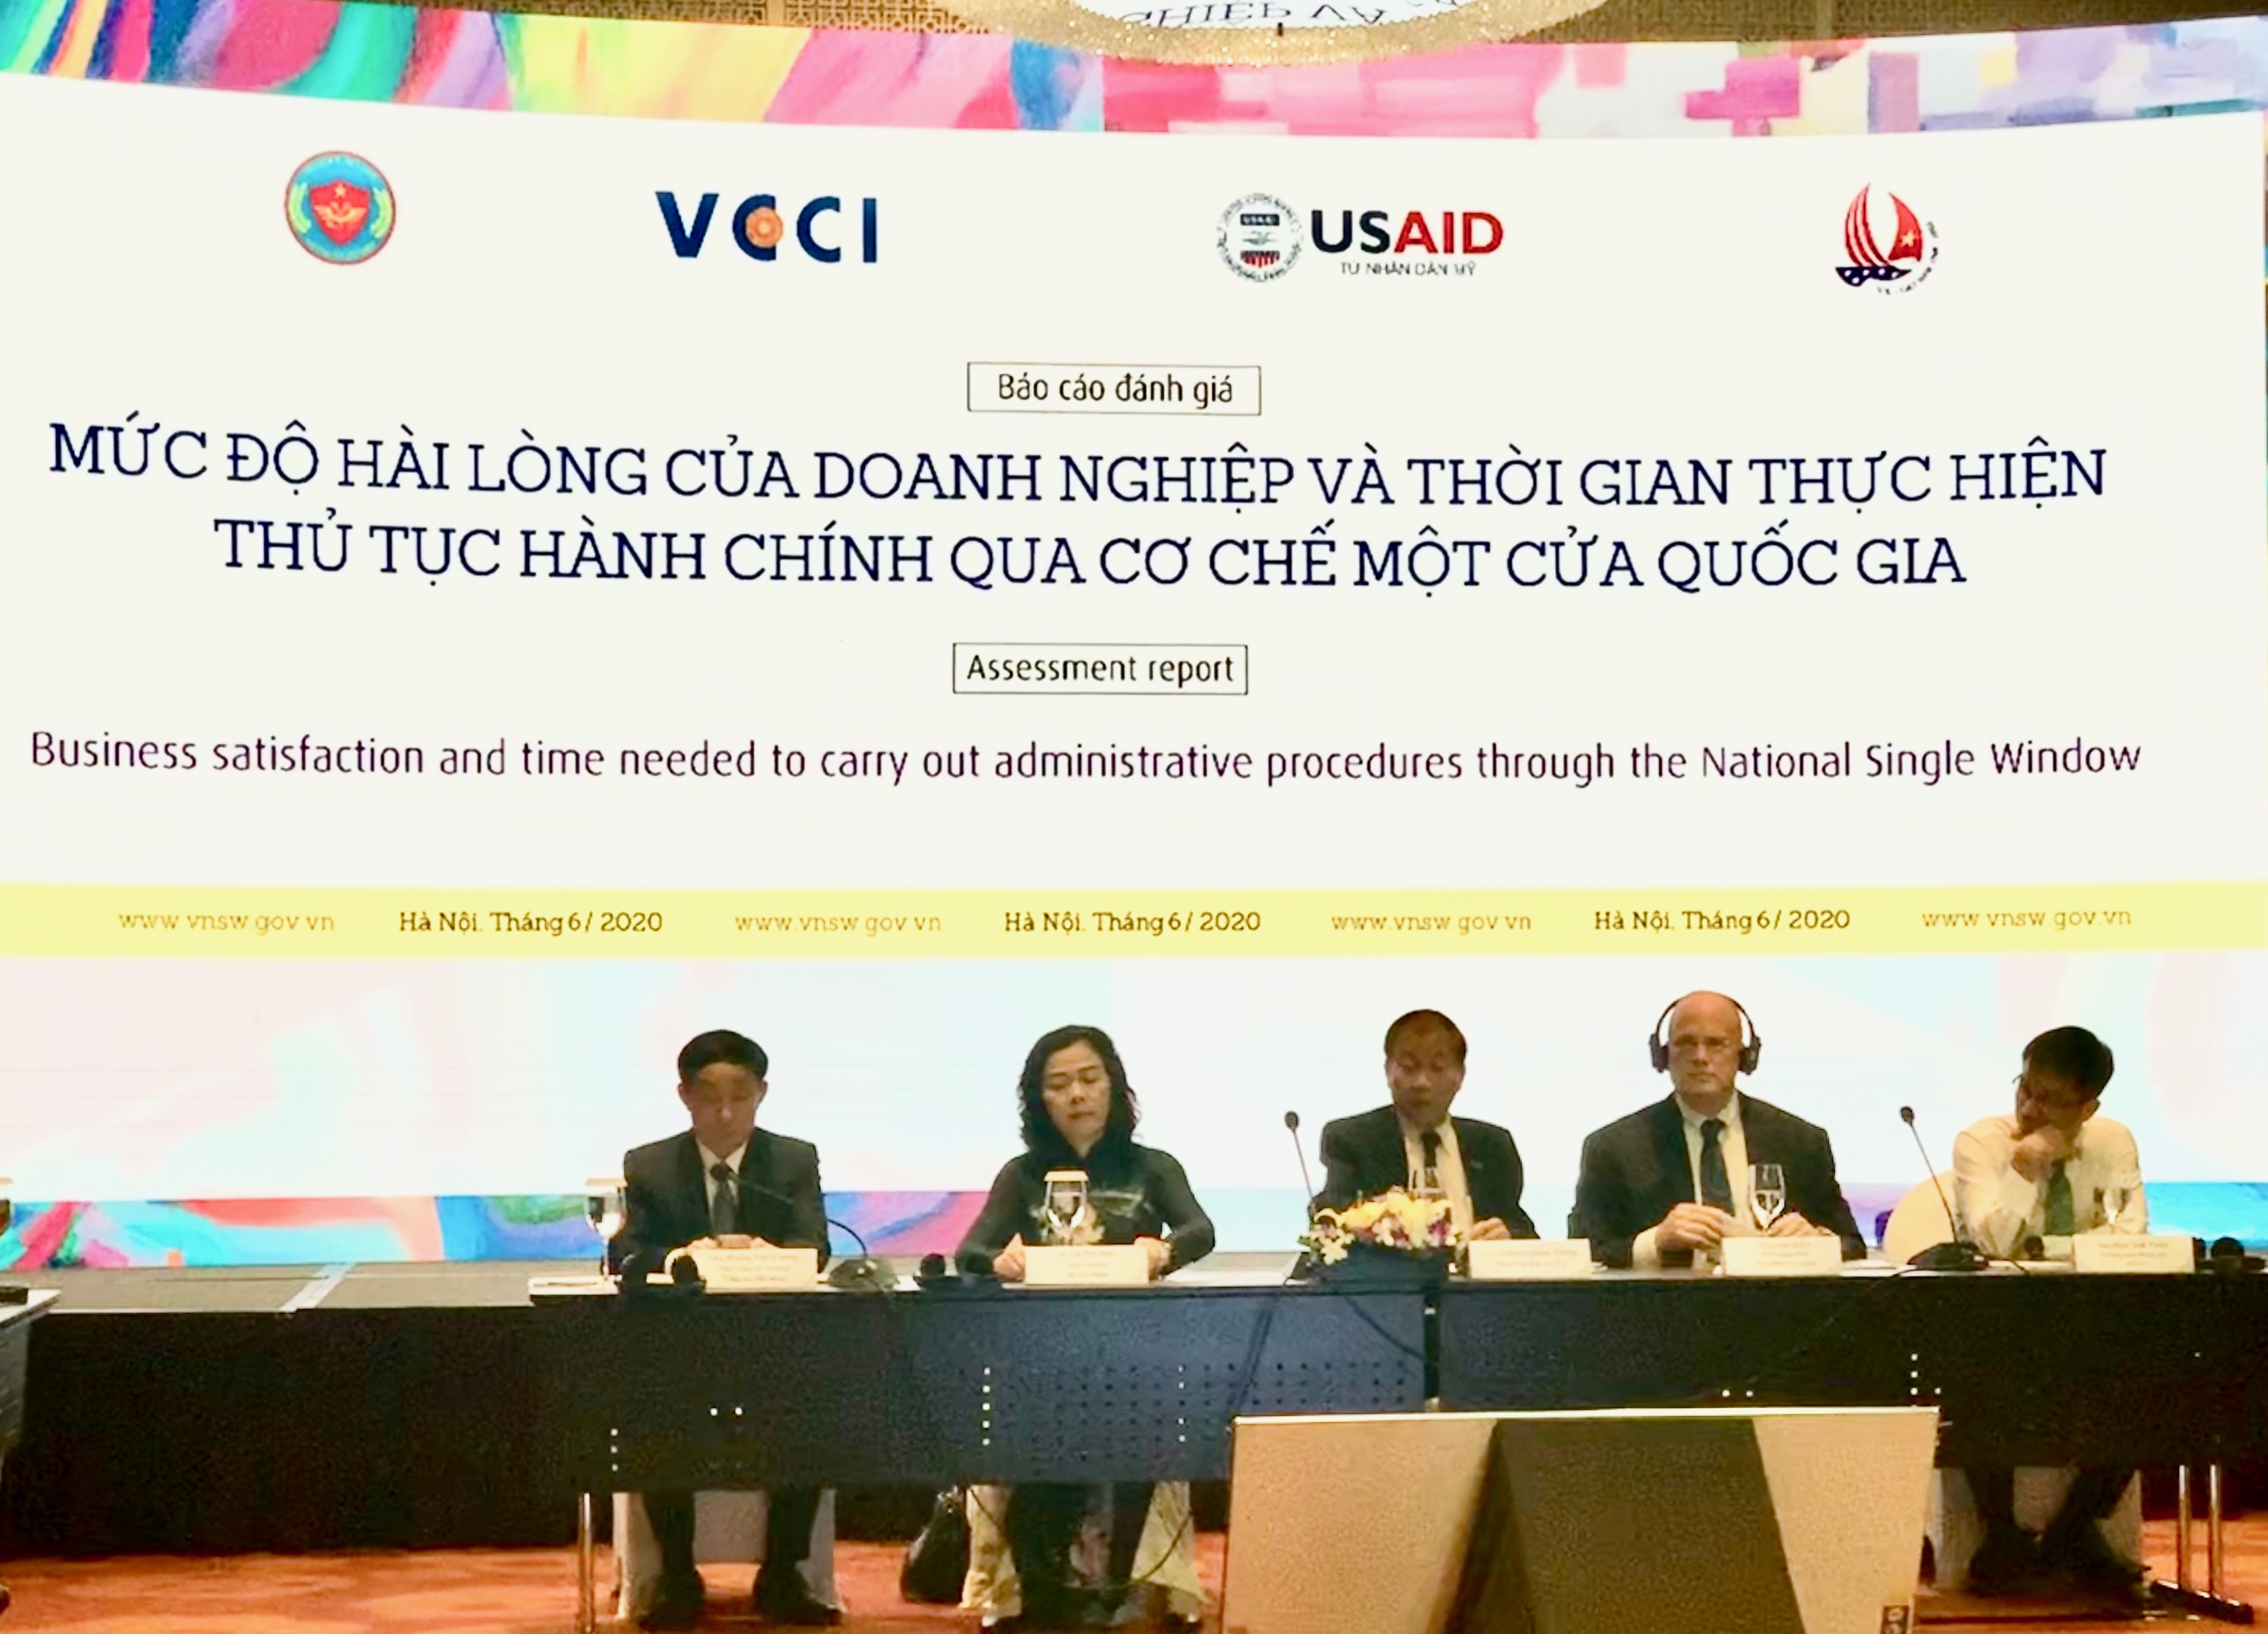 Vietnamese businesses satisfied with customs procedures via National Single Window: USAID survey